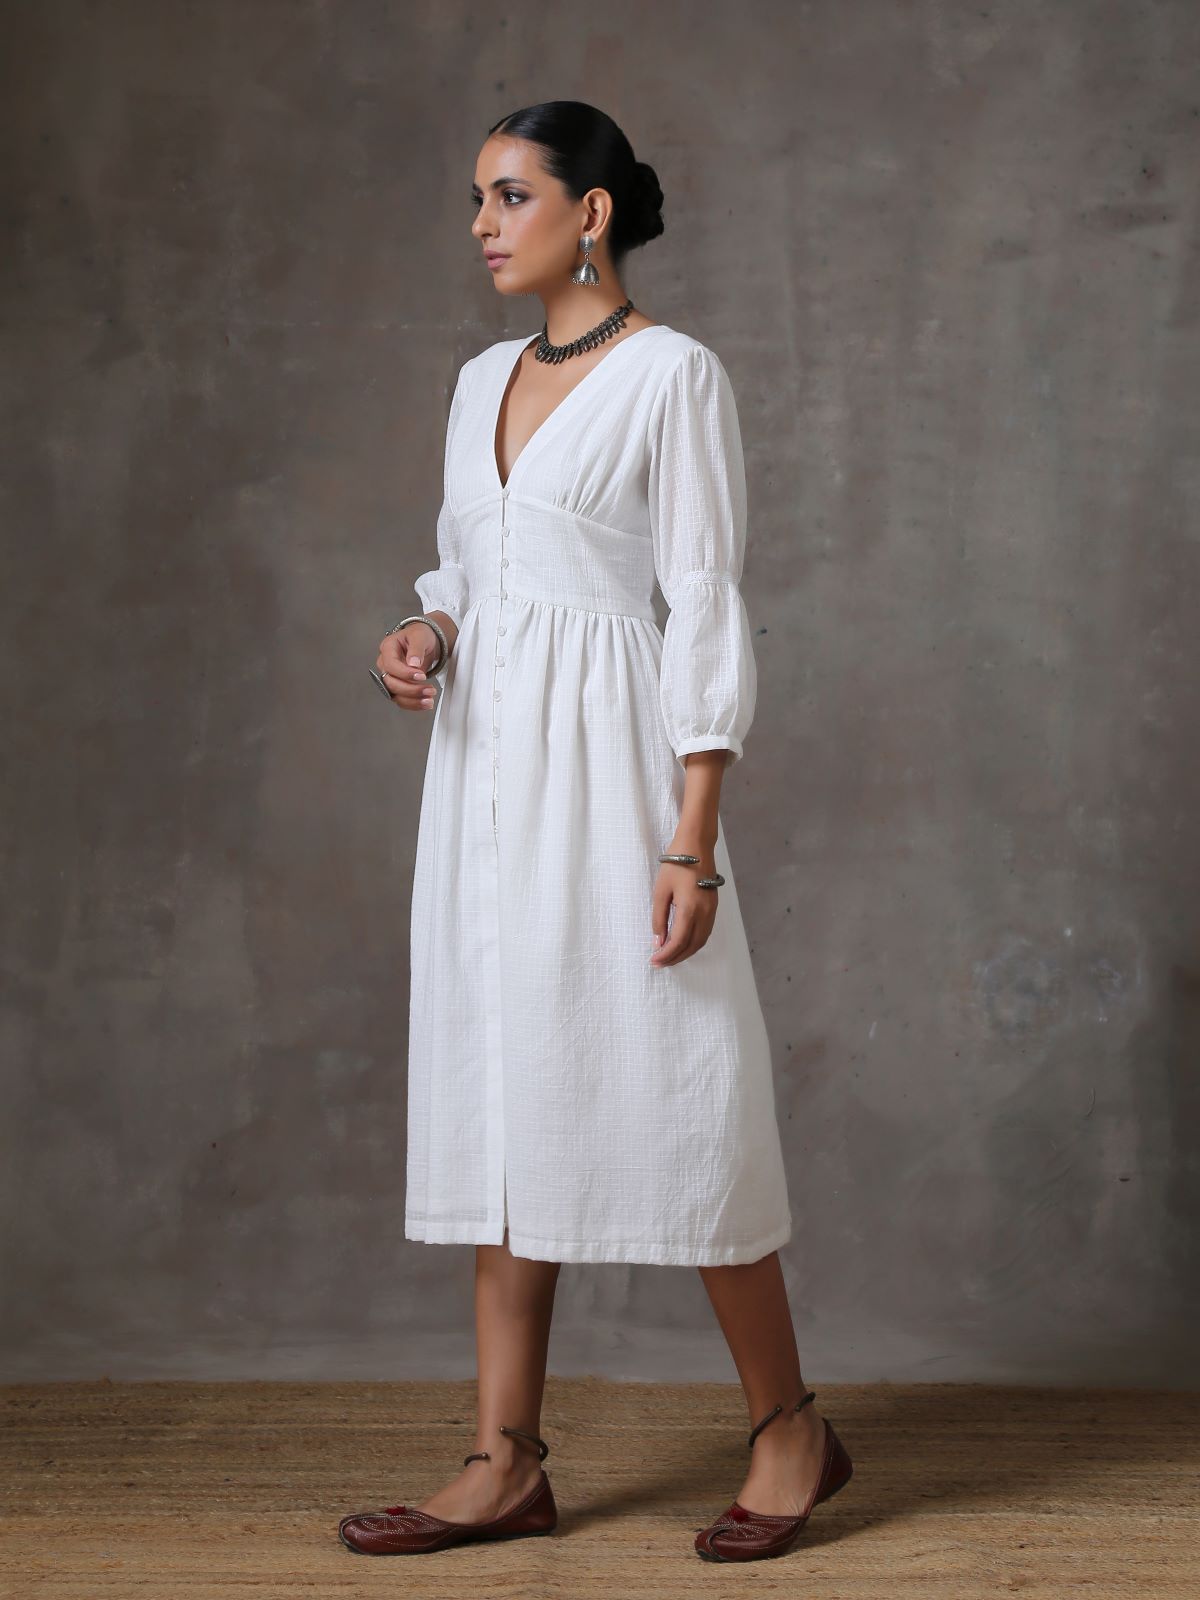 Luna- Deep neck white textured dress